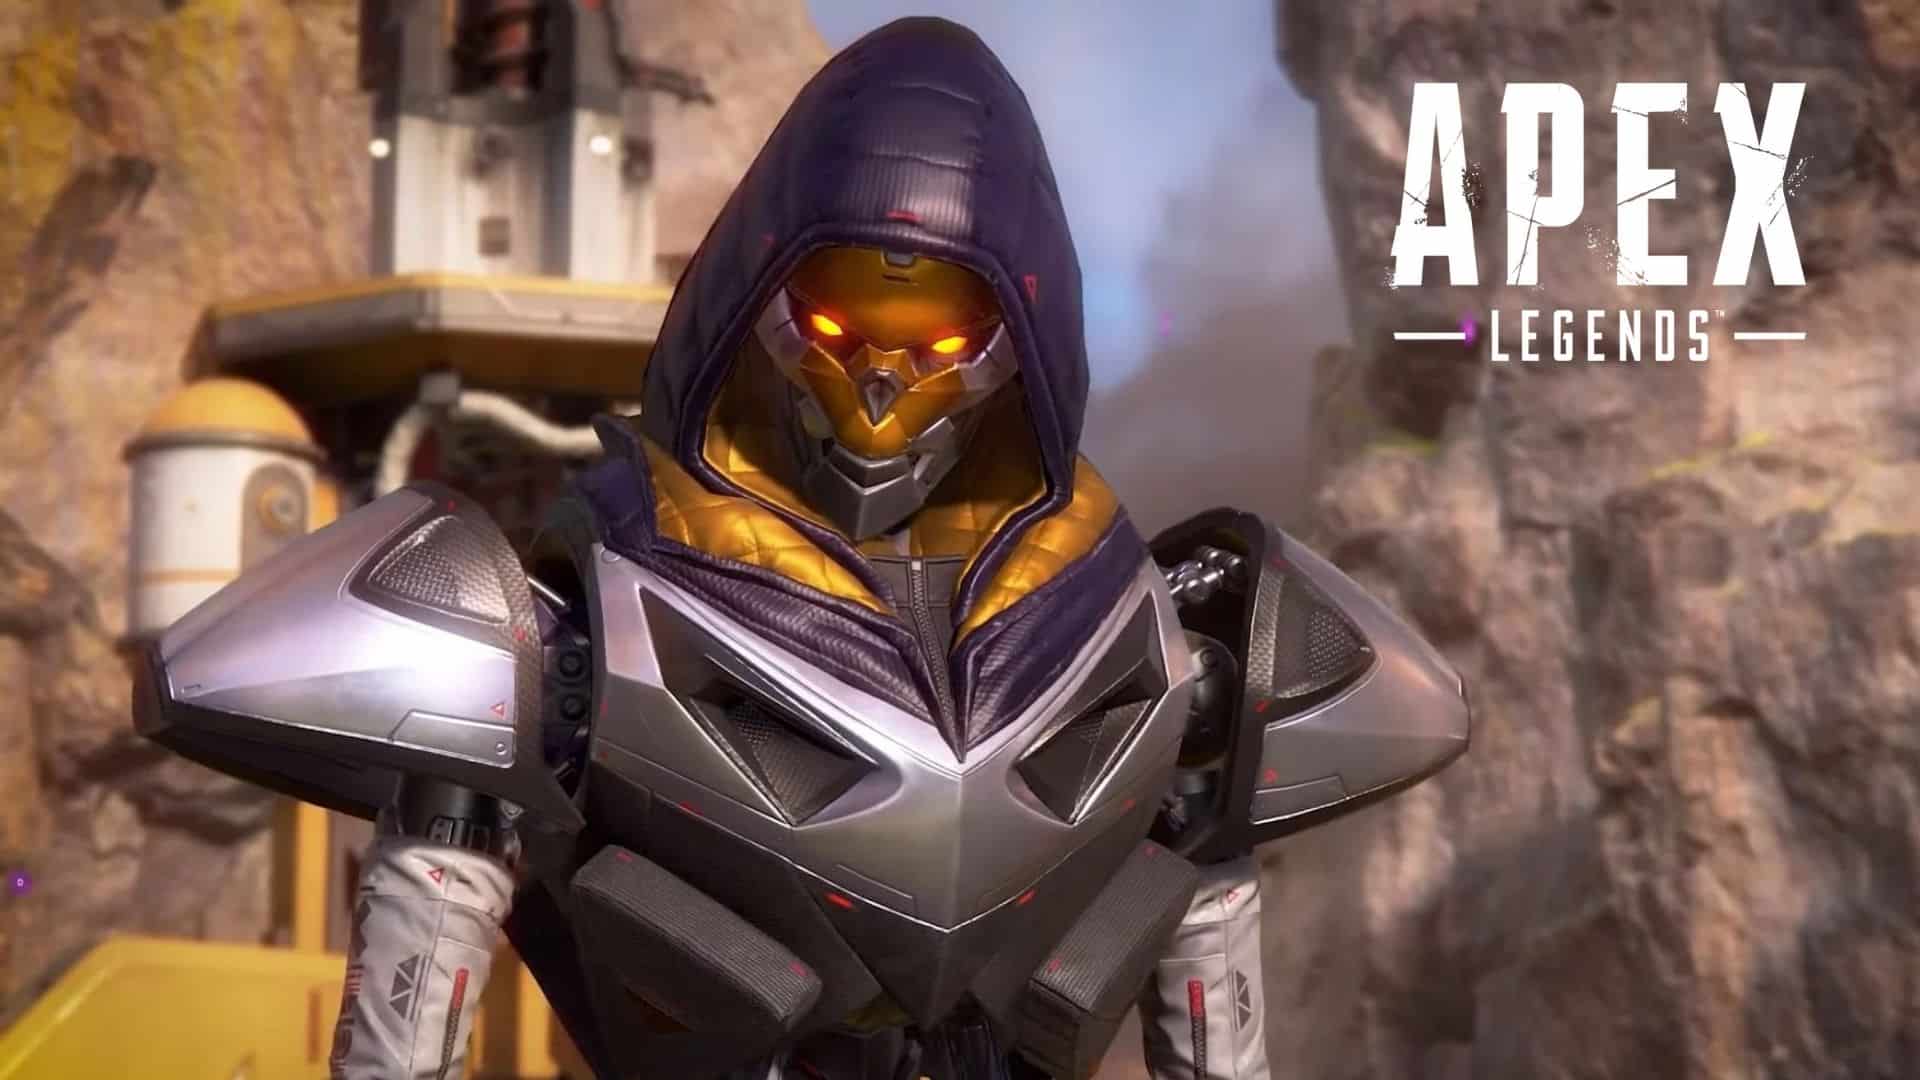 Revenant in Apex Legends with purple and orange skin